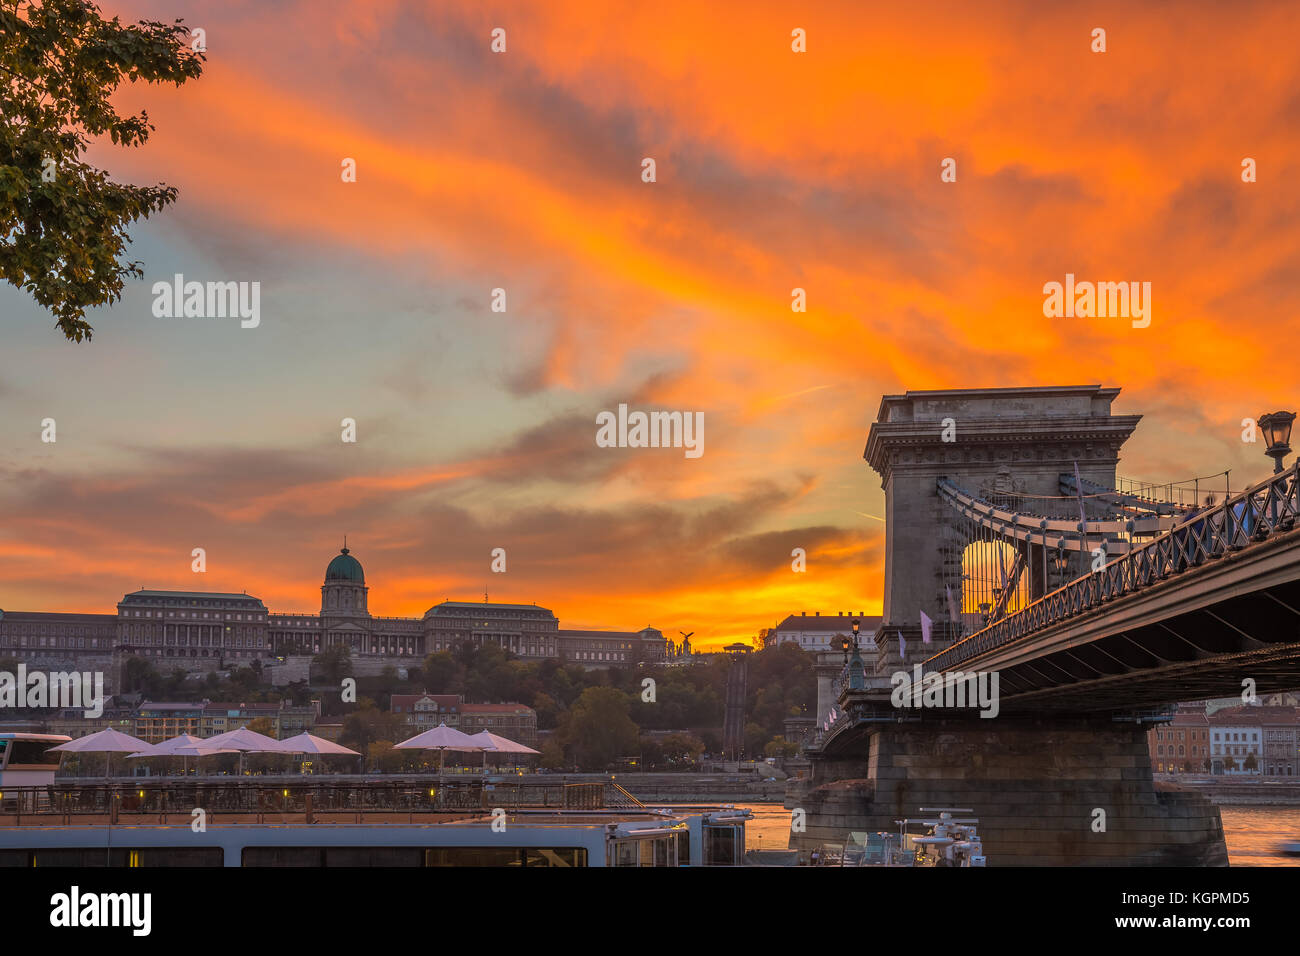 Budapest, Hungary - Beautiful dramatic golden sunset at Szechenyi Chain Bridge with Buda Castle Royal Palace at background Stock Photo